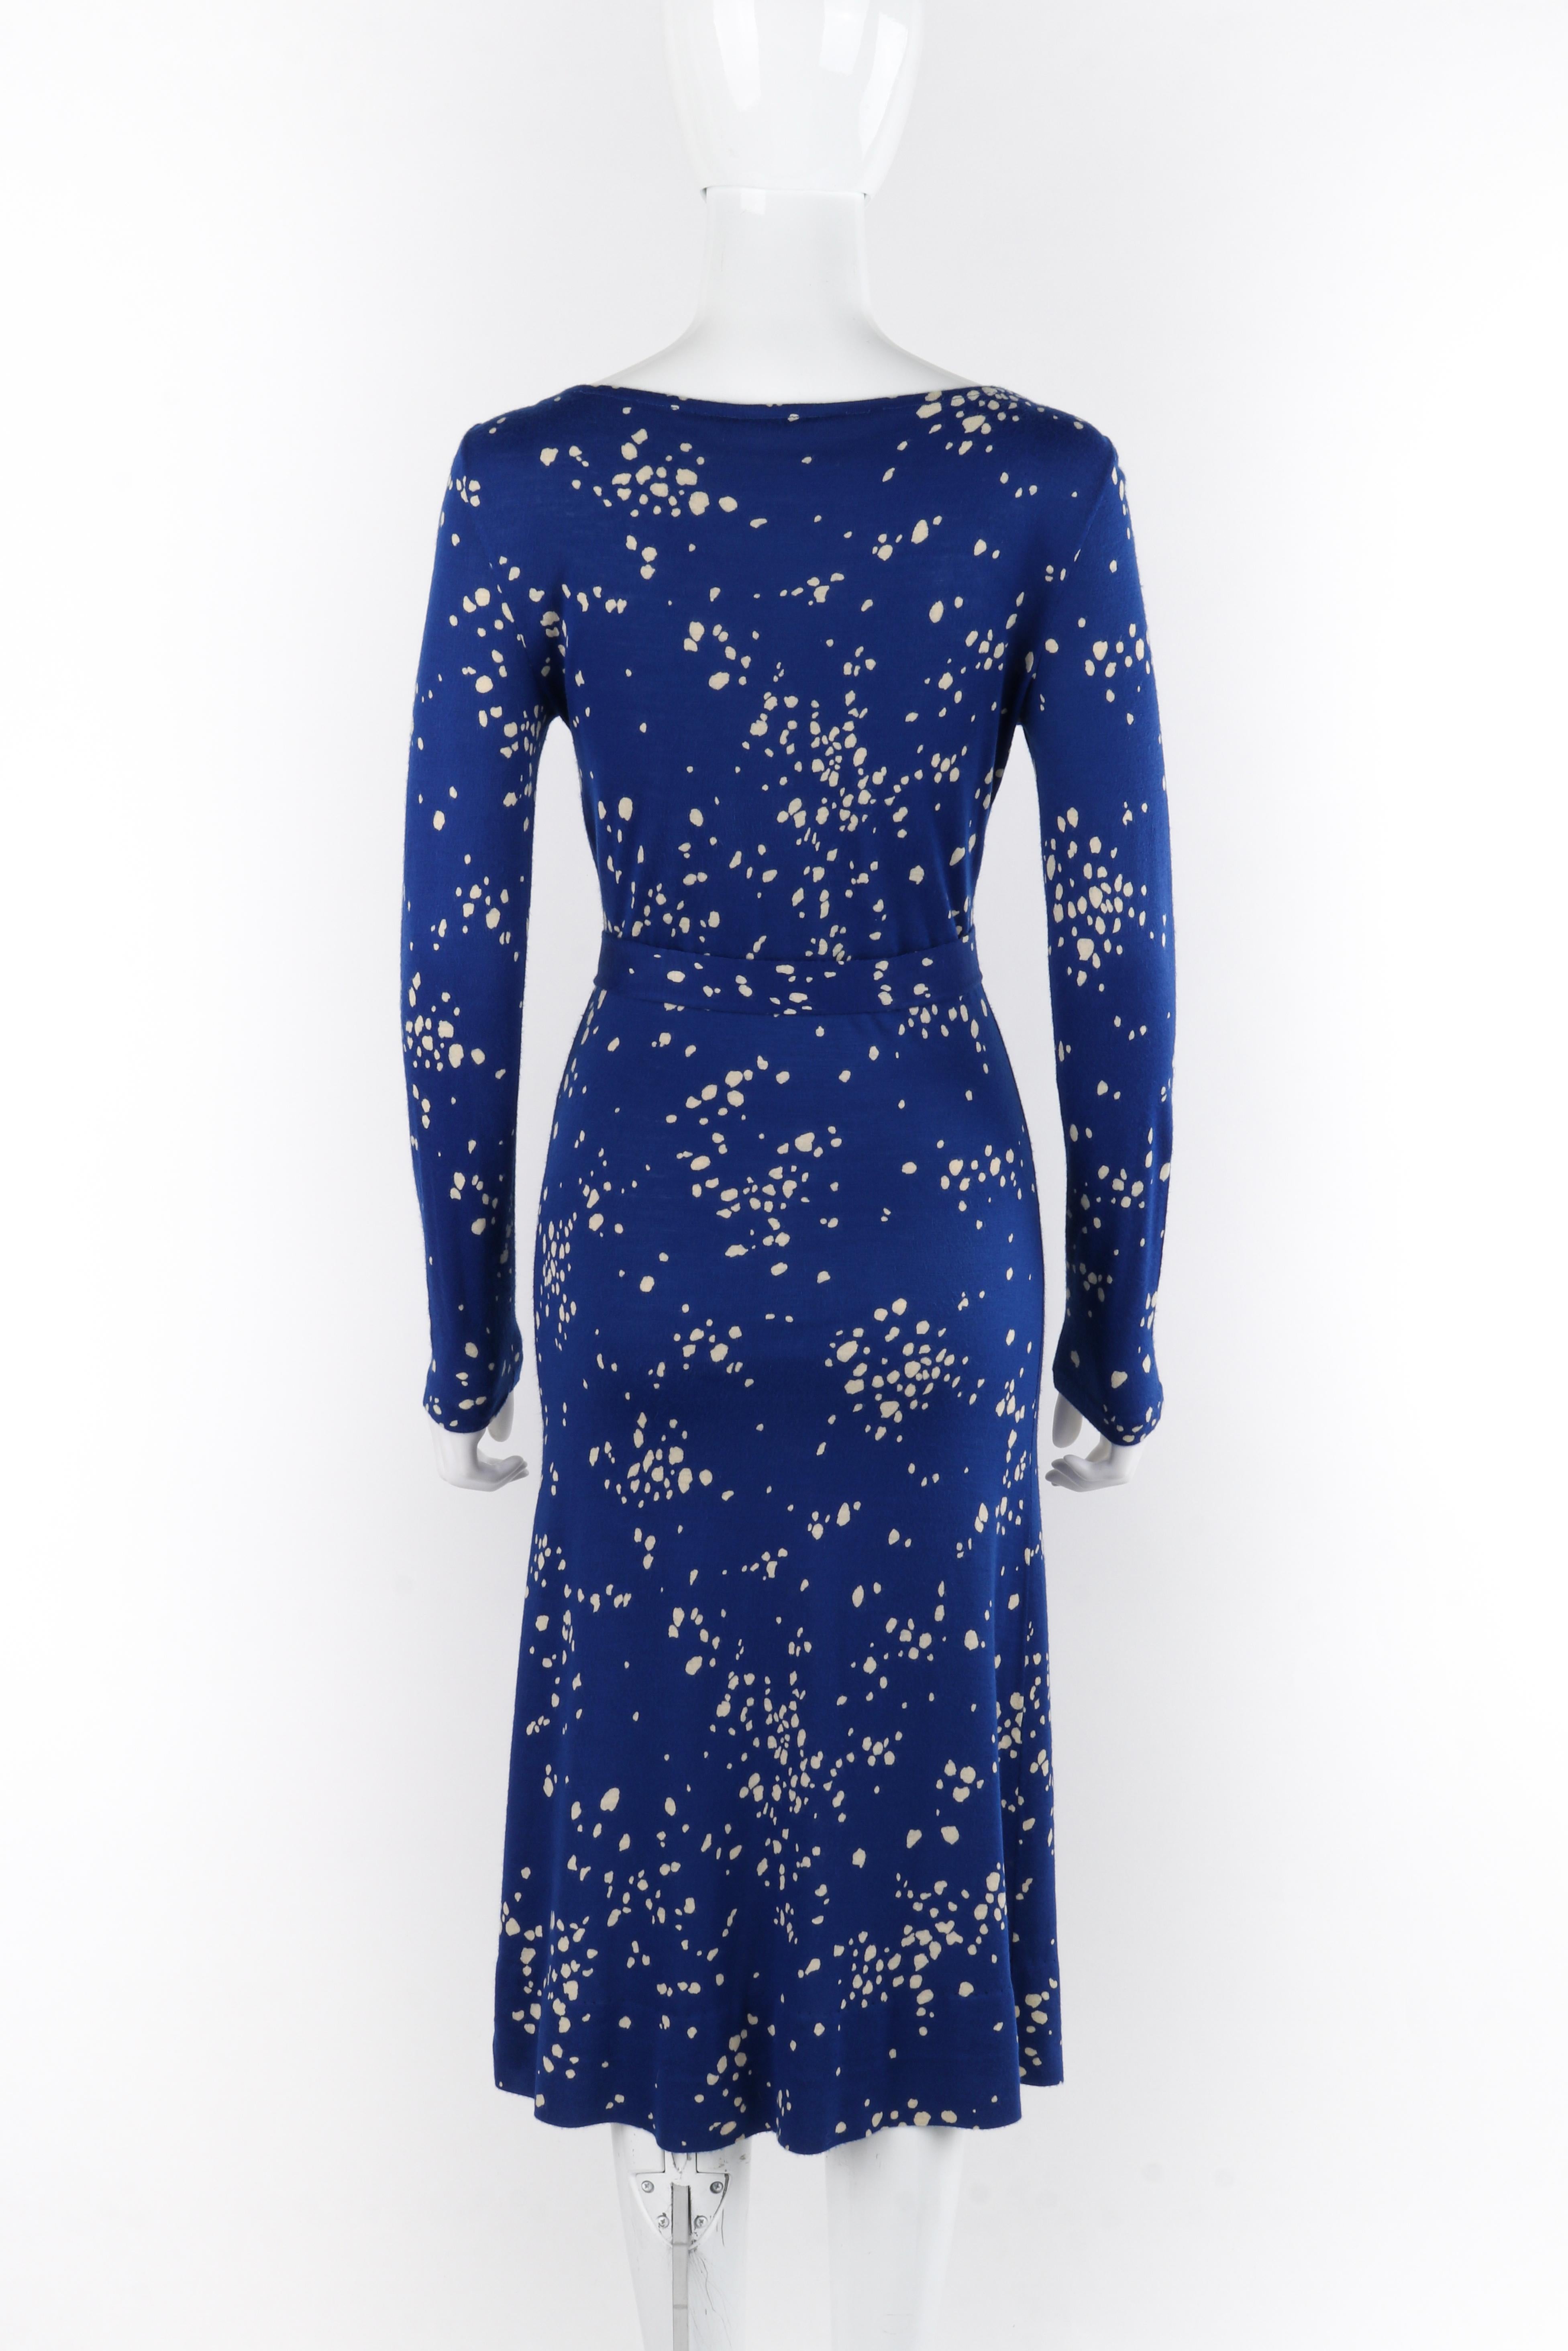 DIANE Von FURSTENBERG c.1970's Blue White Speckled Belted Long Sleeve Dress 1